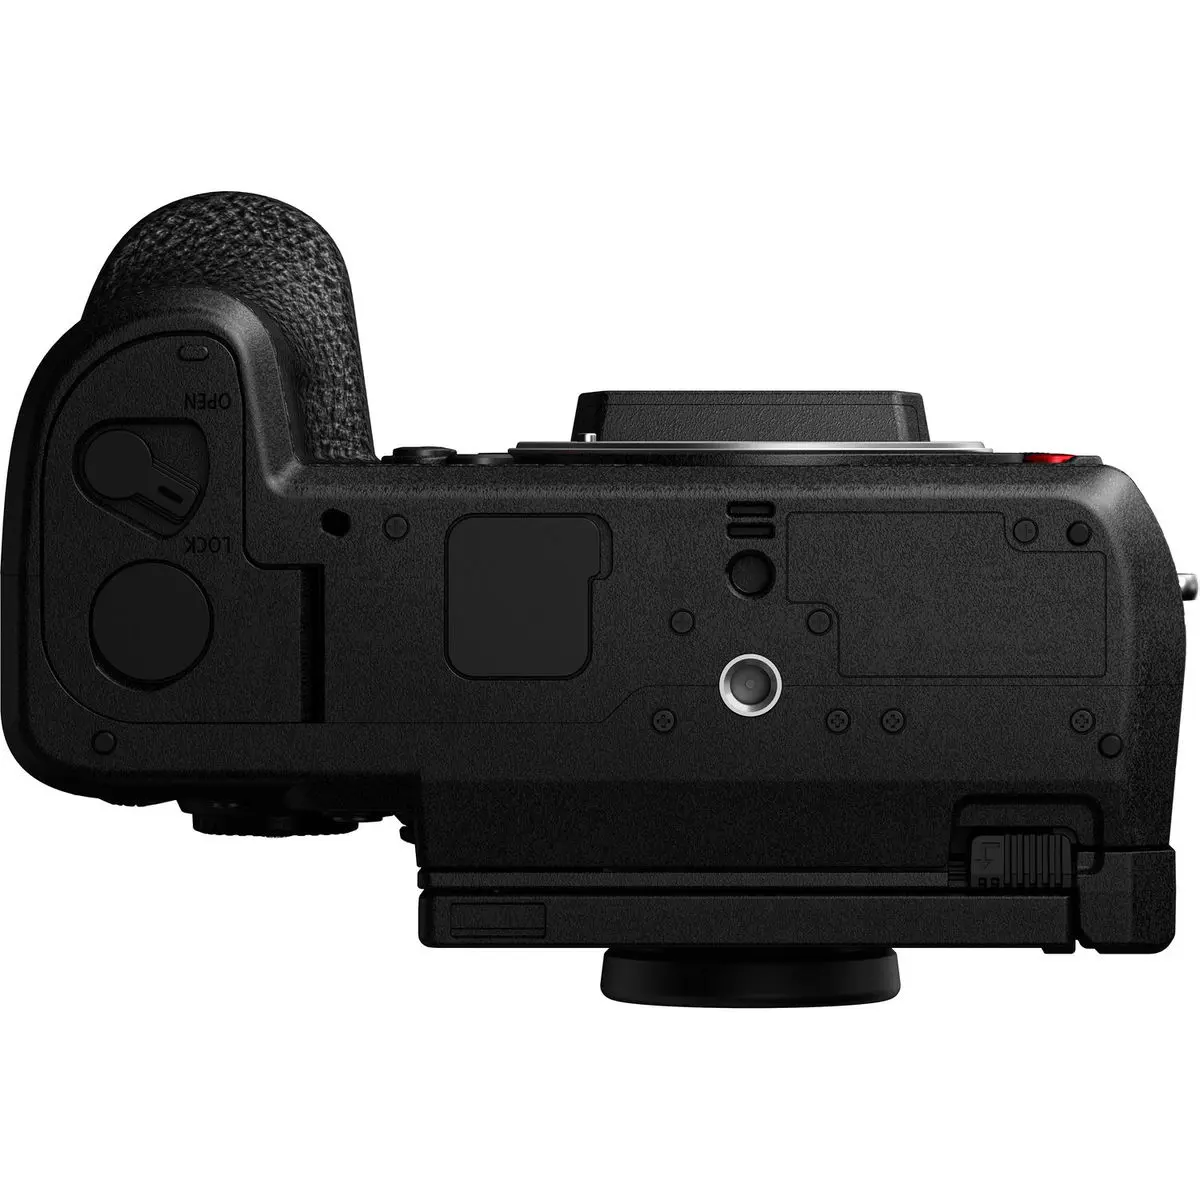 4. Panasonic Lumix DC-S1H Body Camera